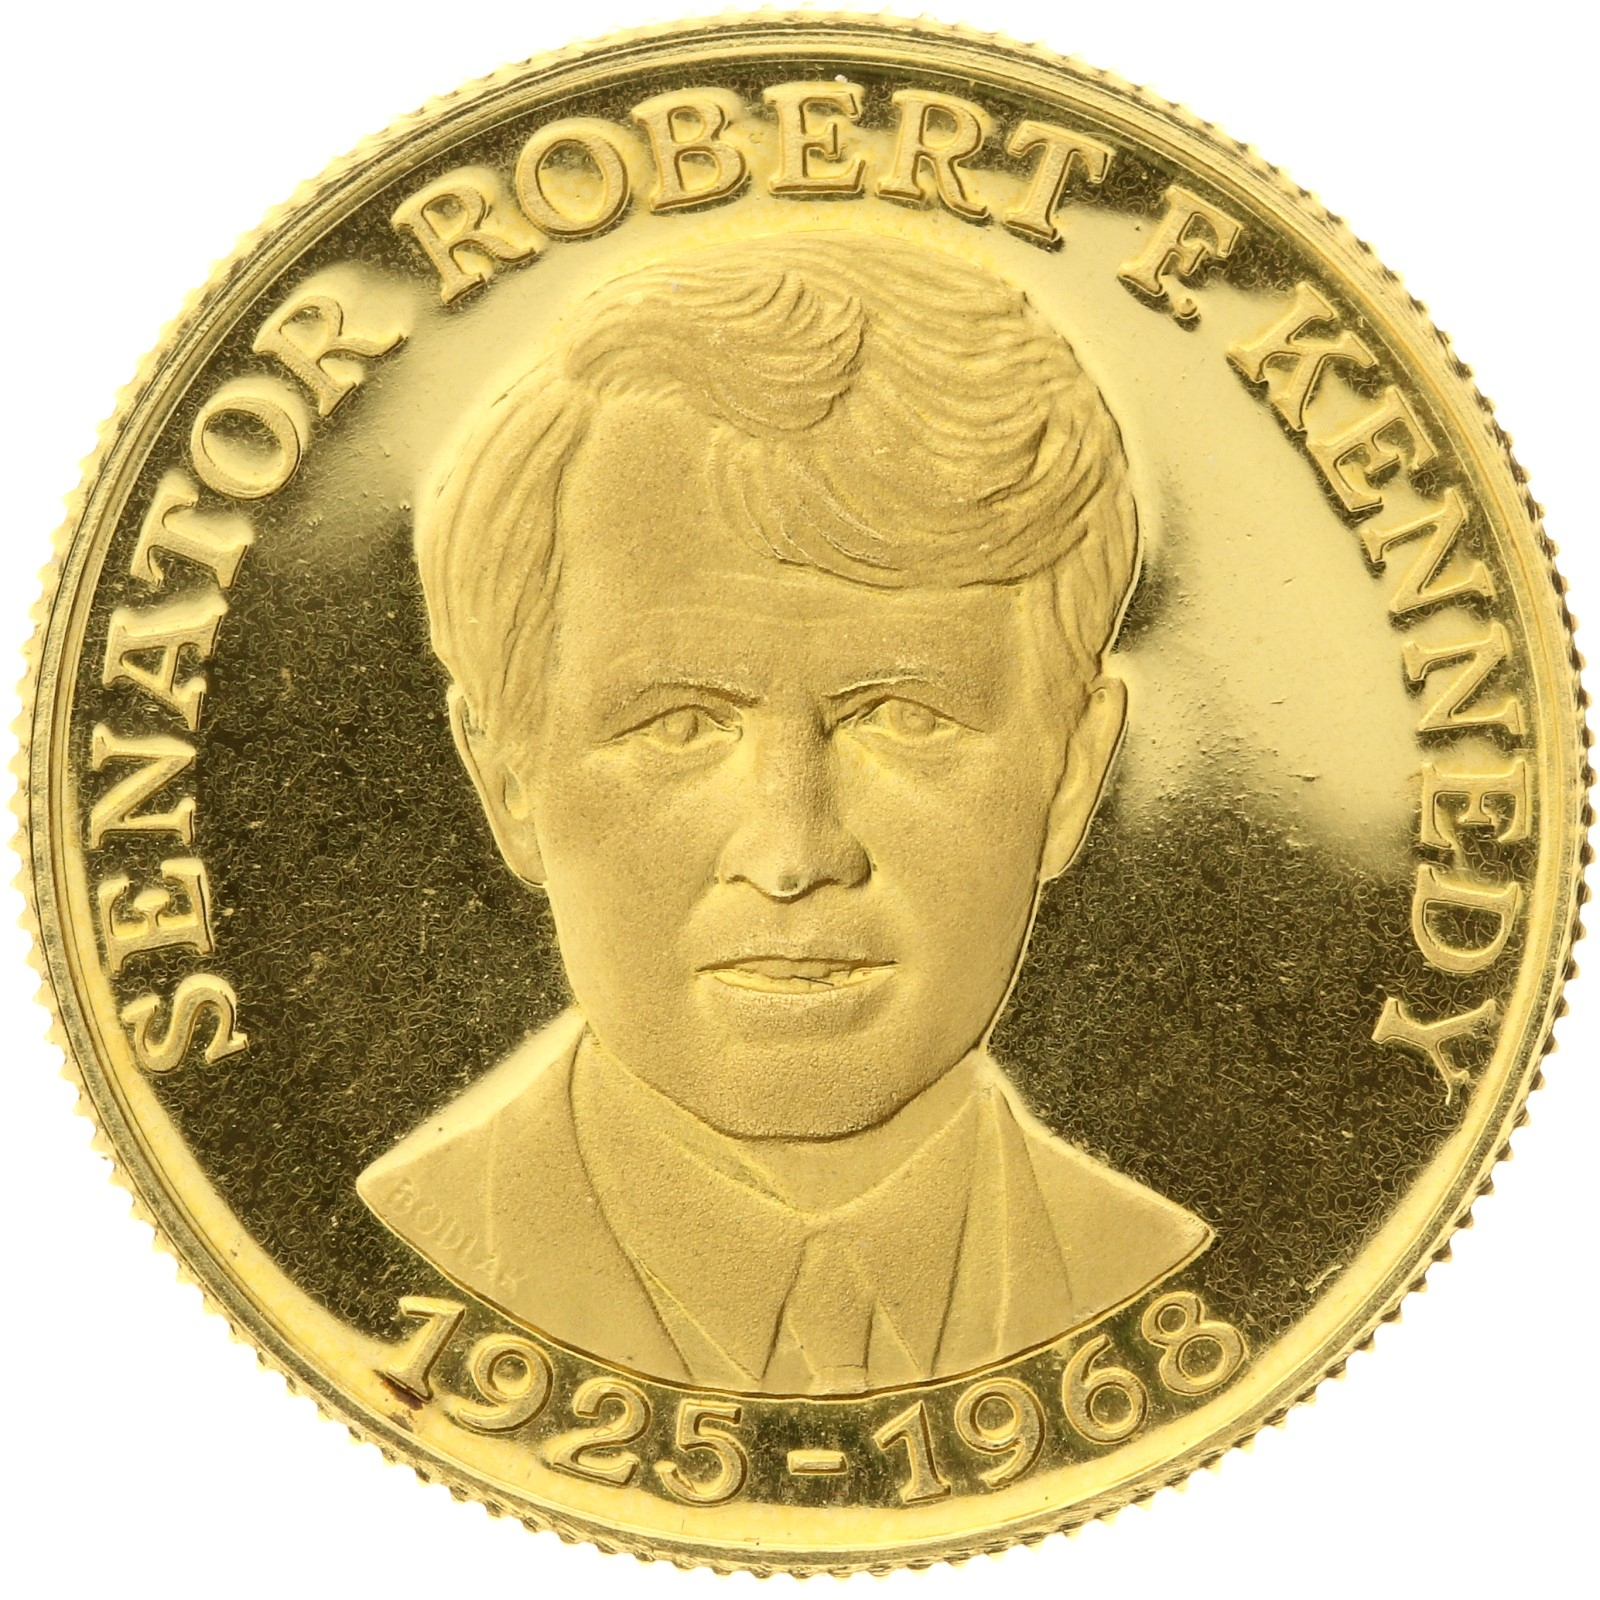 USA - Medal (1 ducat) - 1968 - Senator Robert F. Kennedy